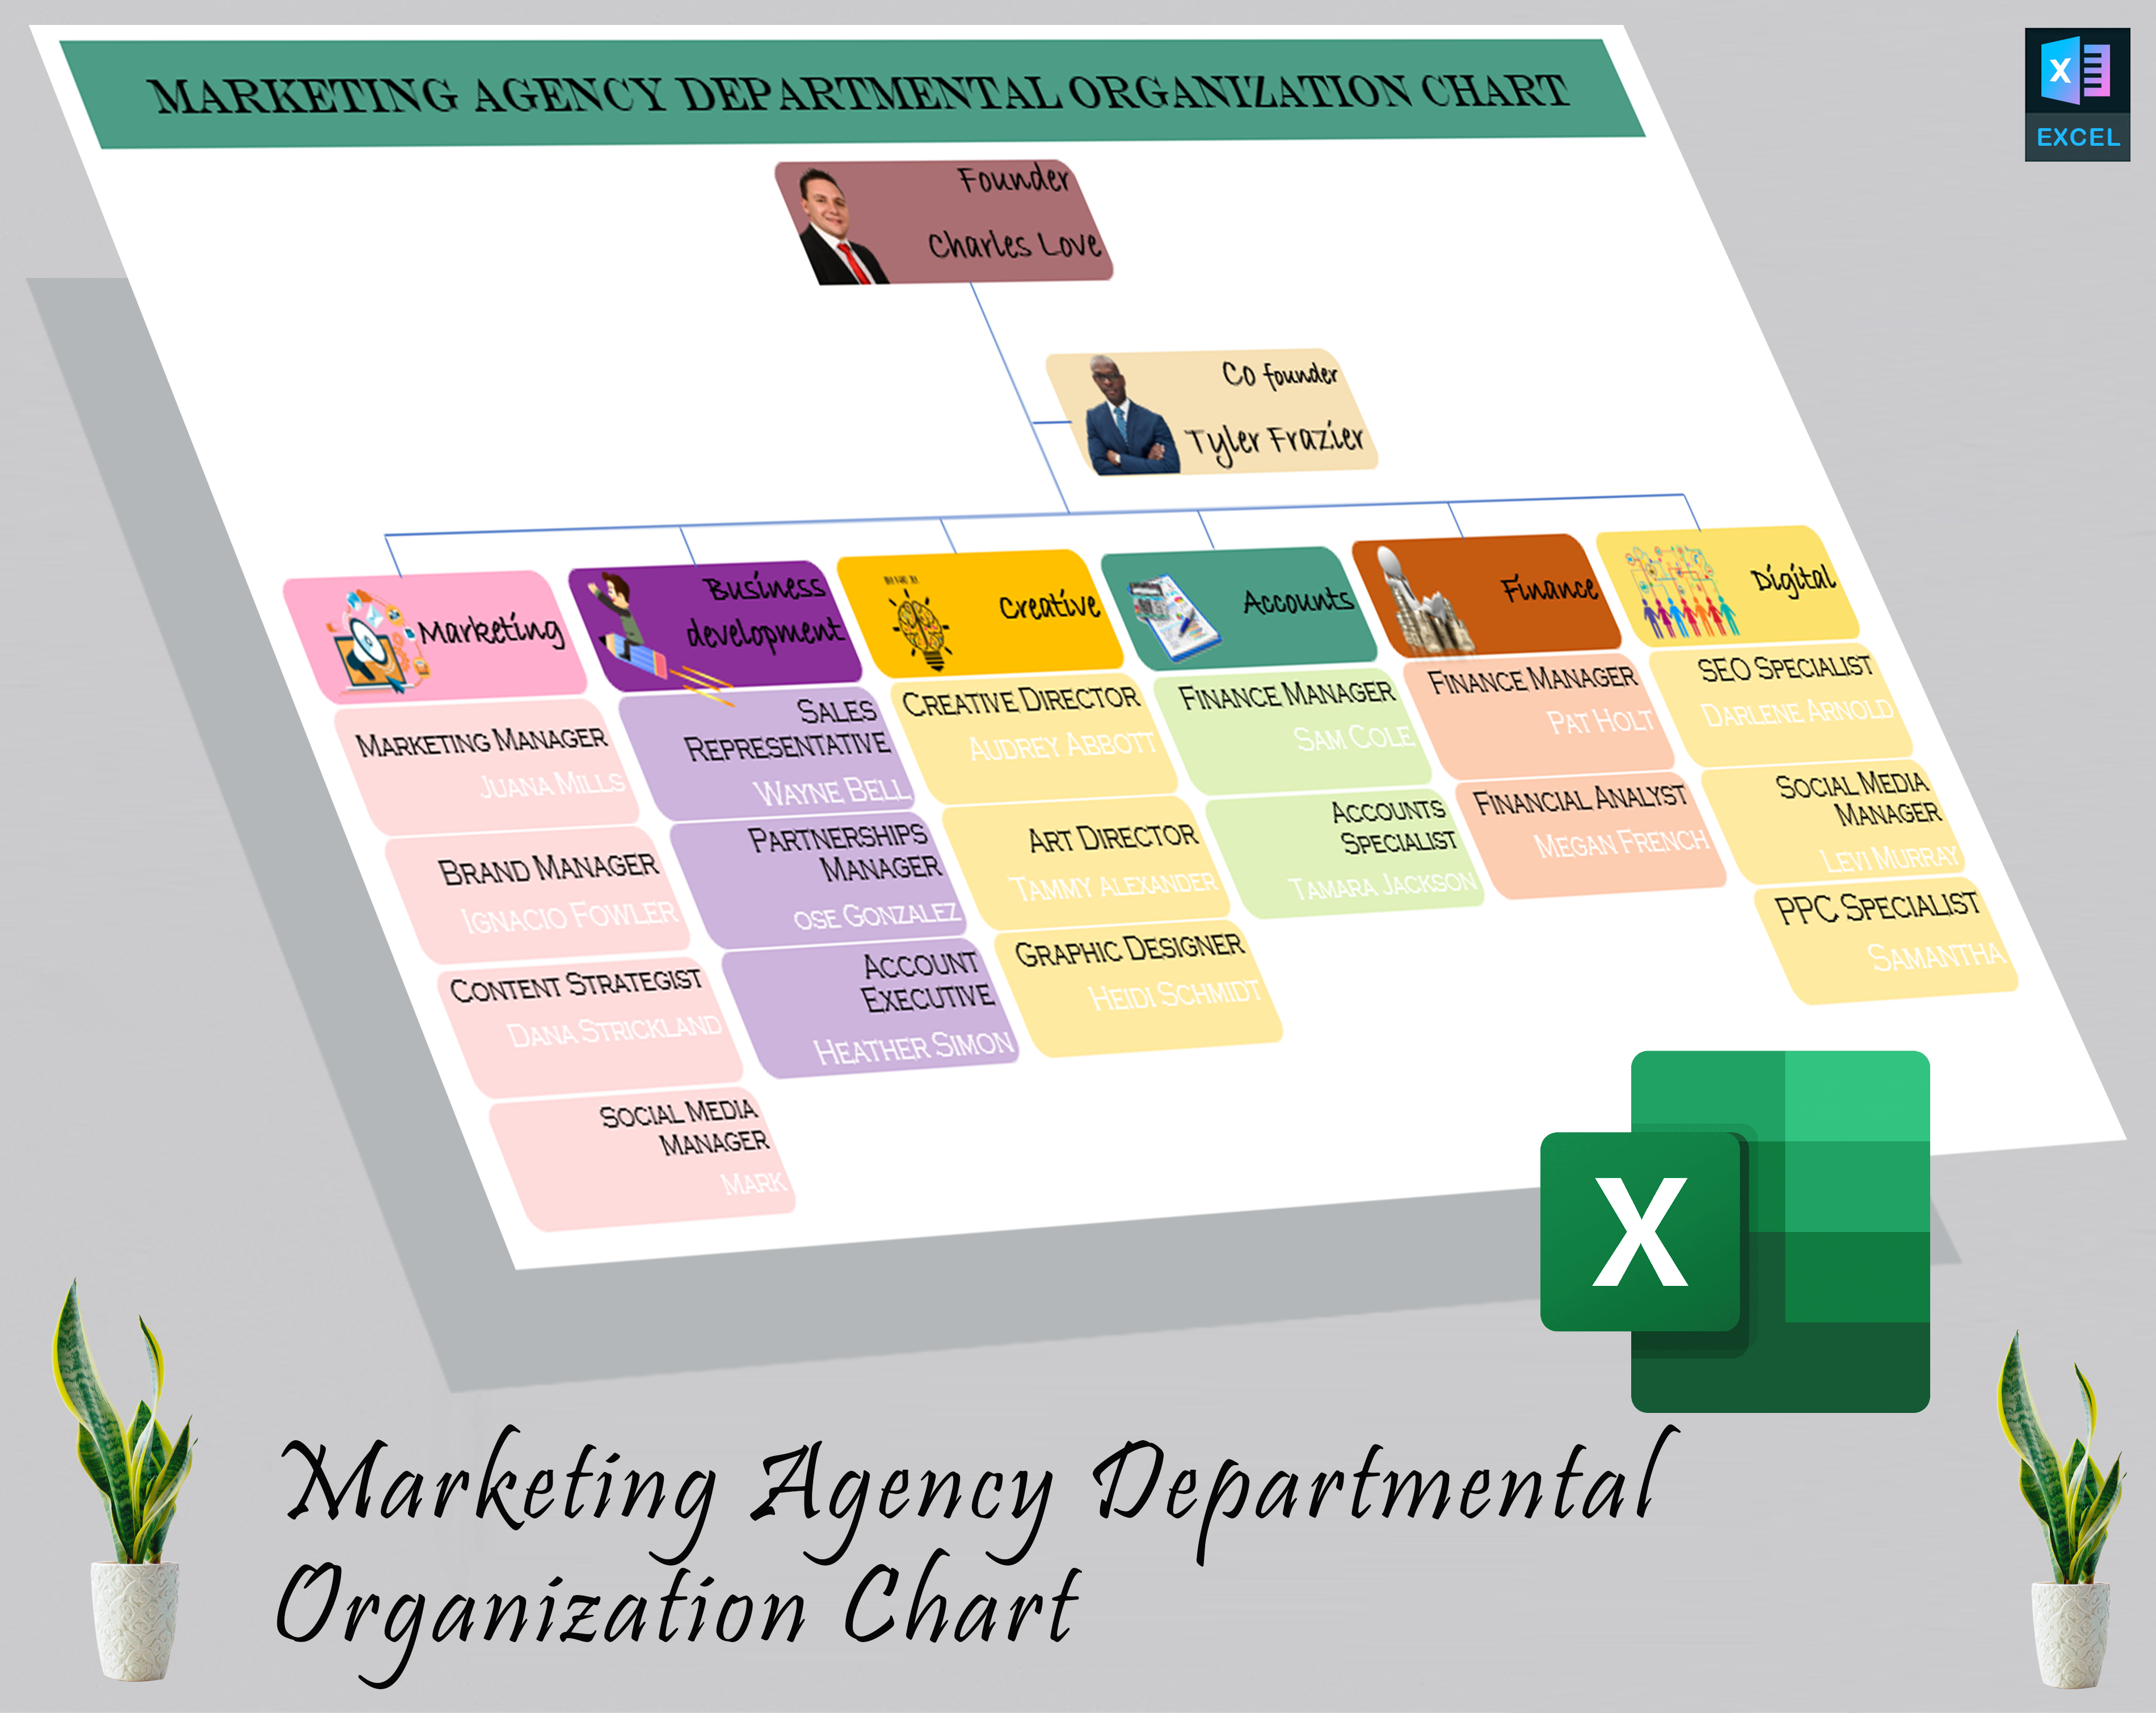 Marketing agency organization chart